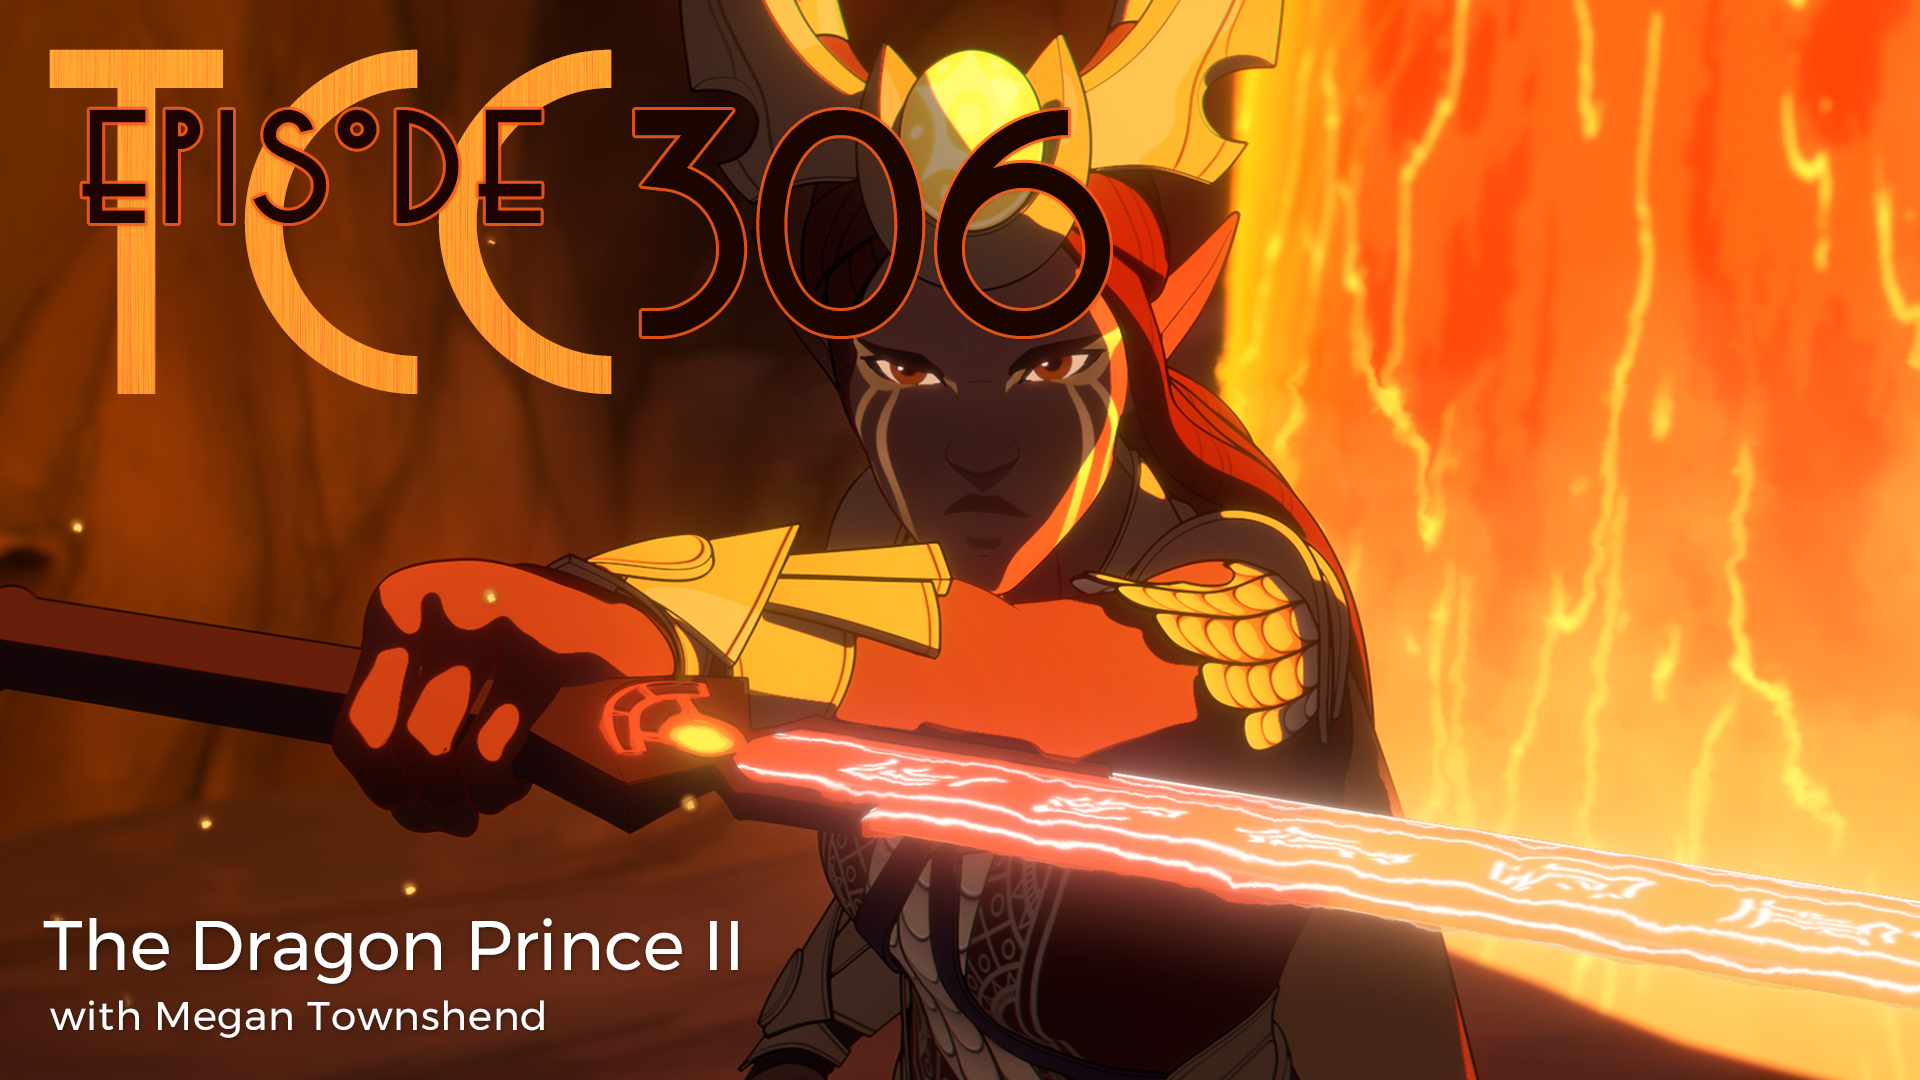 The Citadel Cafe 306: The Dragon Prince II